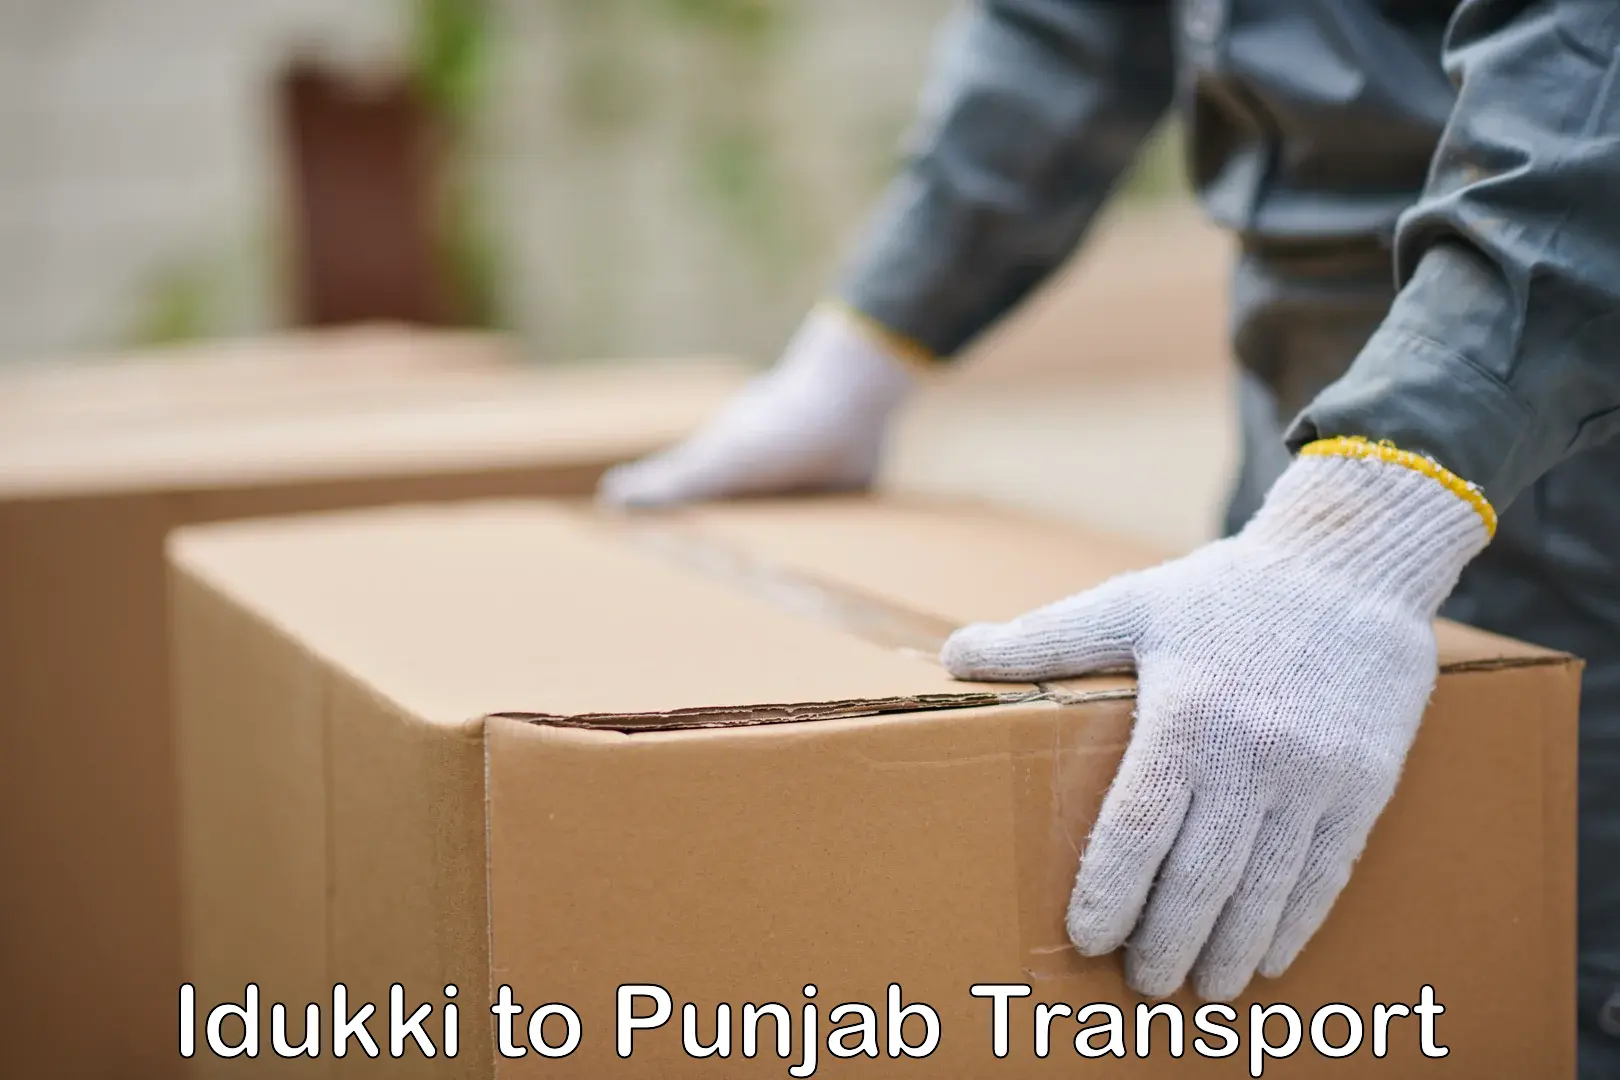 Online transport service Idukki to Punjab